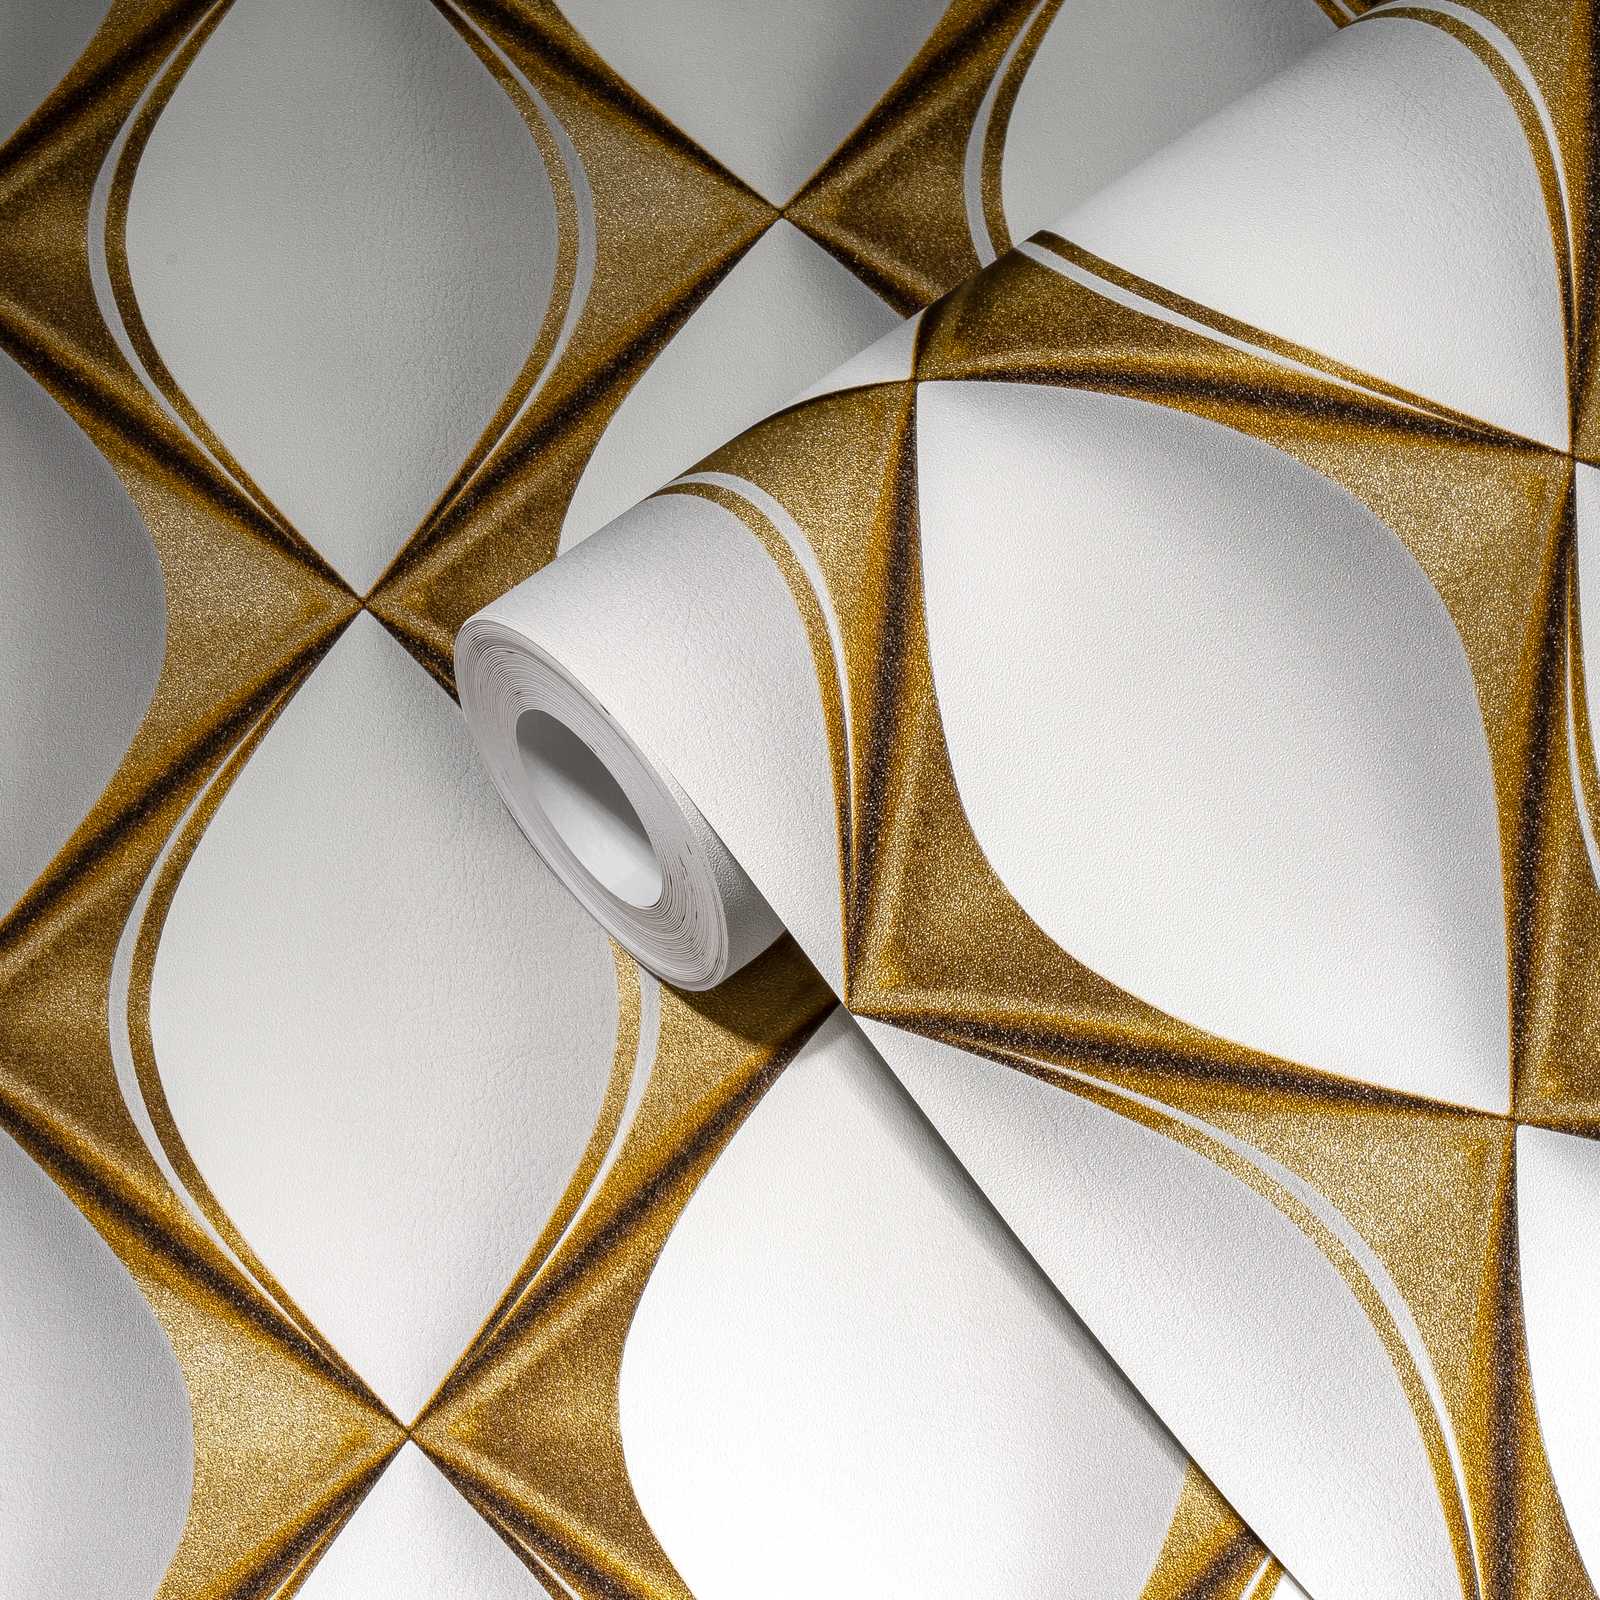             Papel pintado 3D patrón retro dorado - blanco, gris, metálico
        